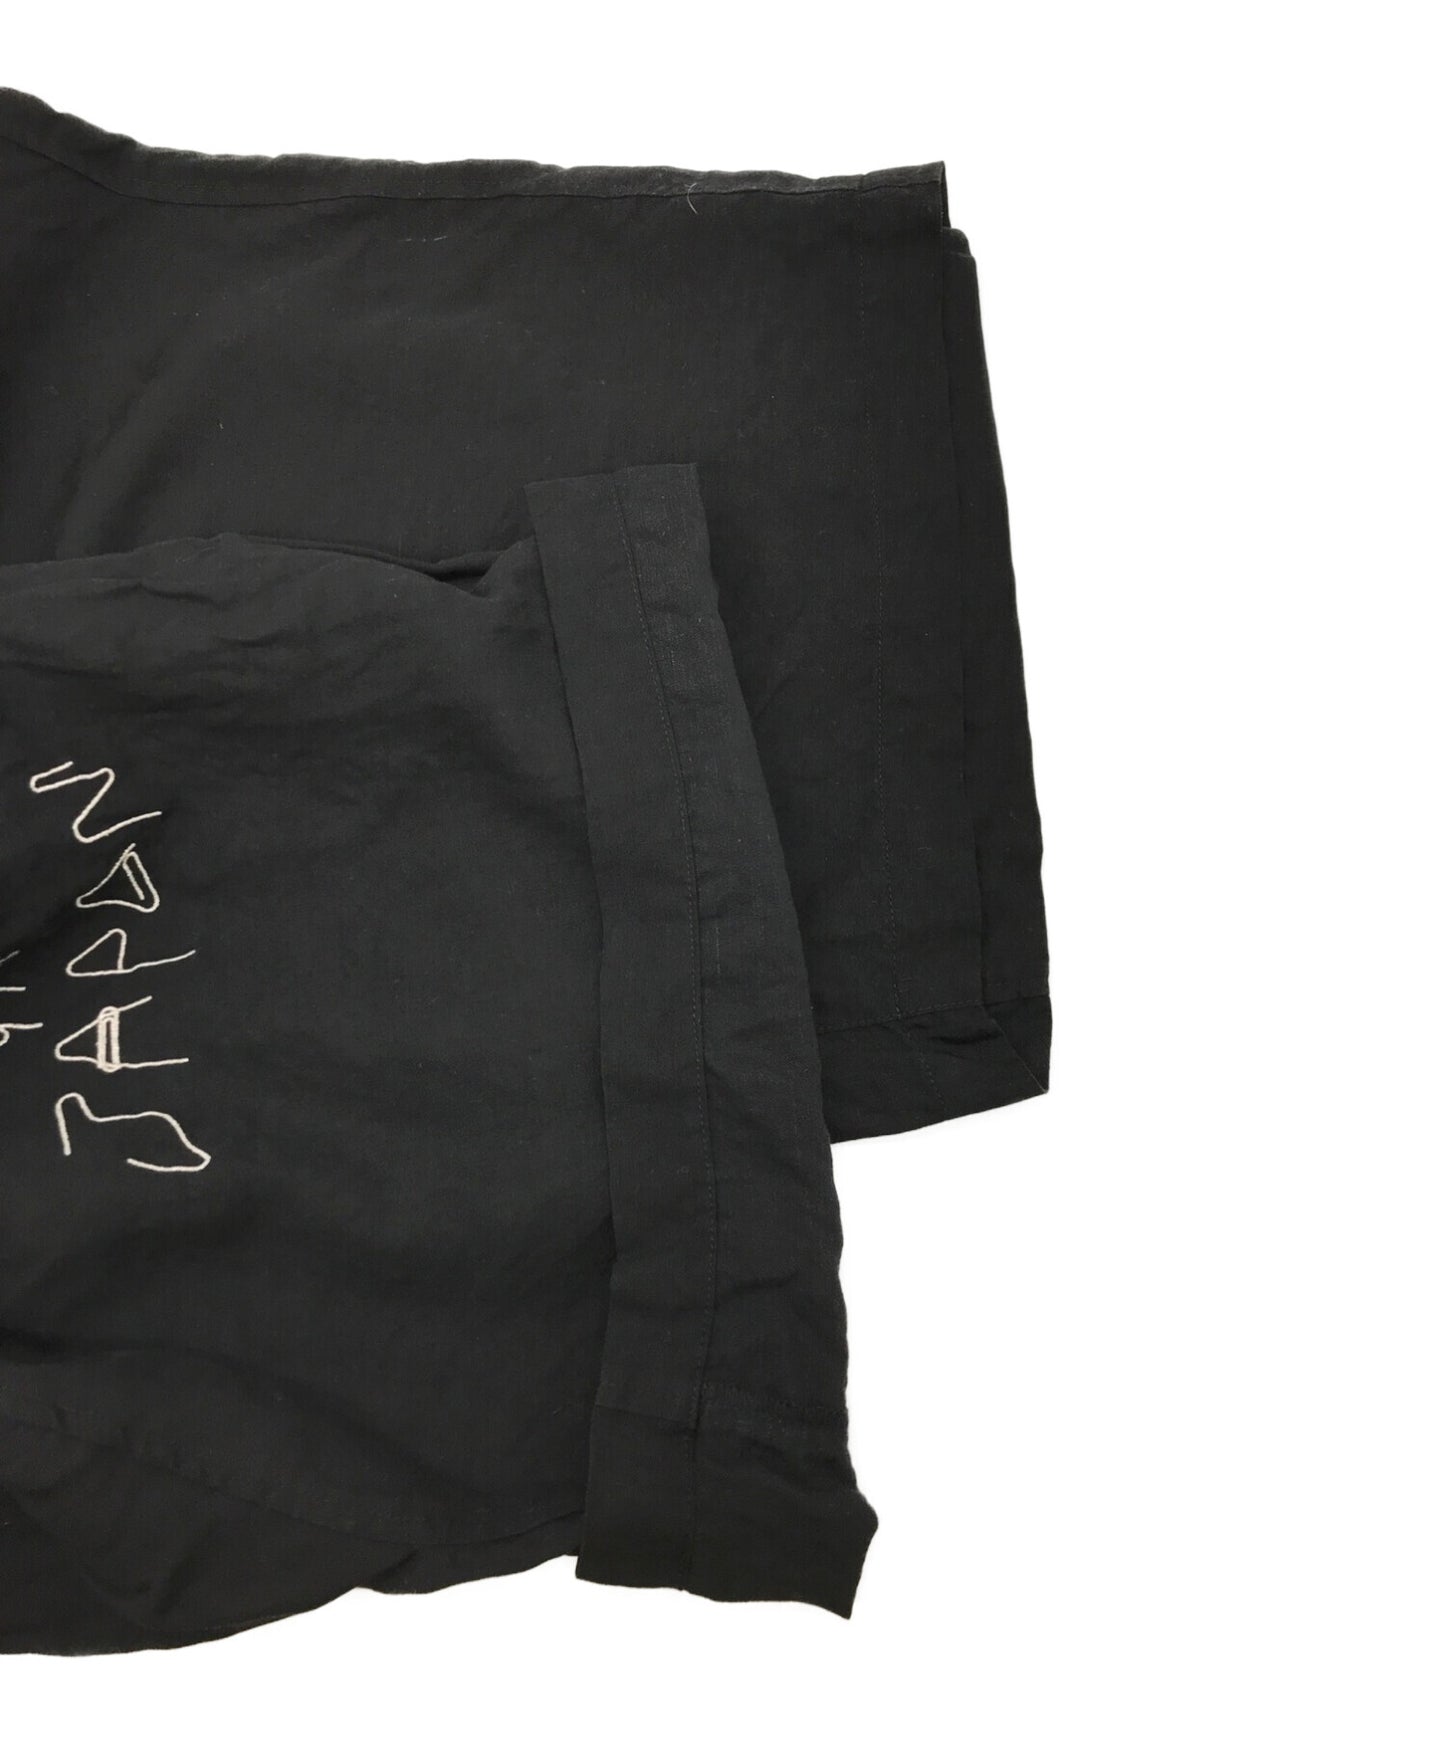 Yohji Yamamoto Pour Homme 15SS剪贴画刺绣亚麻汤sarouel裤子hu-p35-314